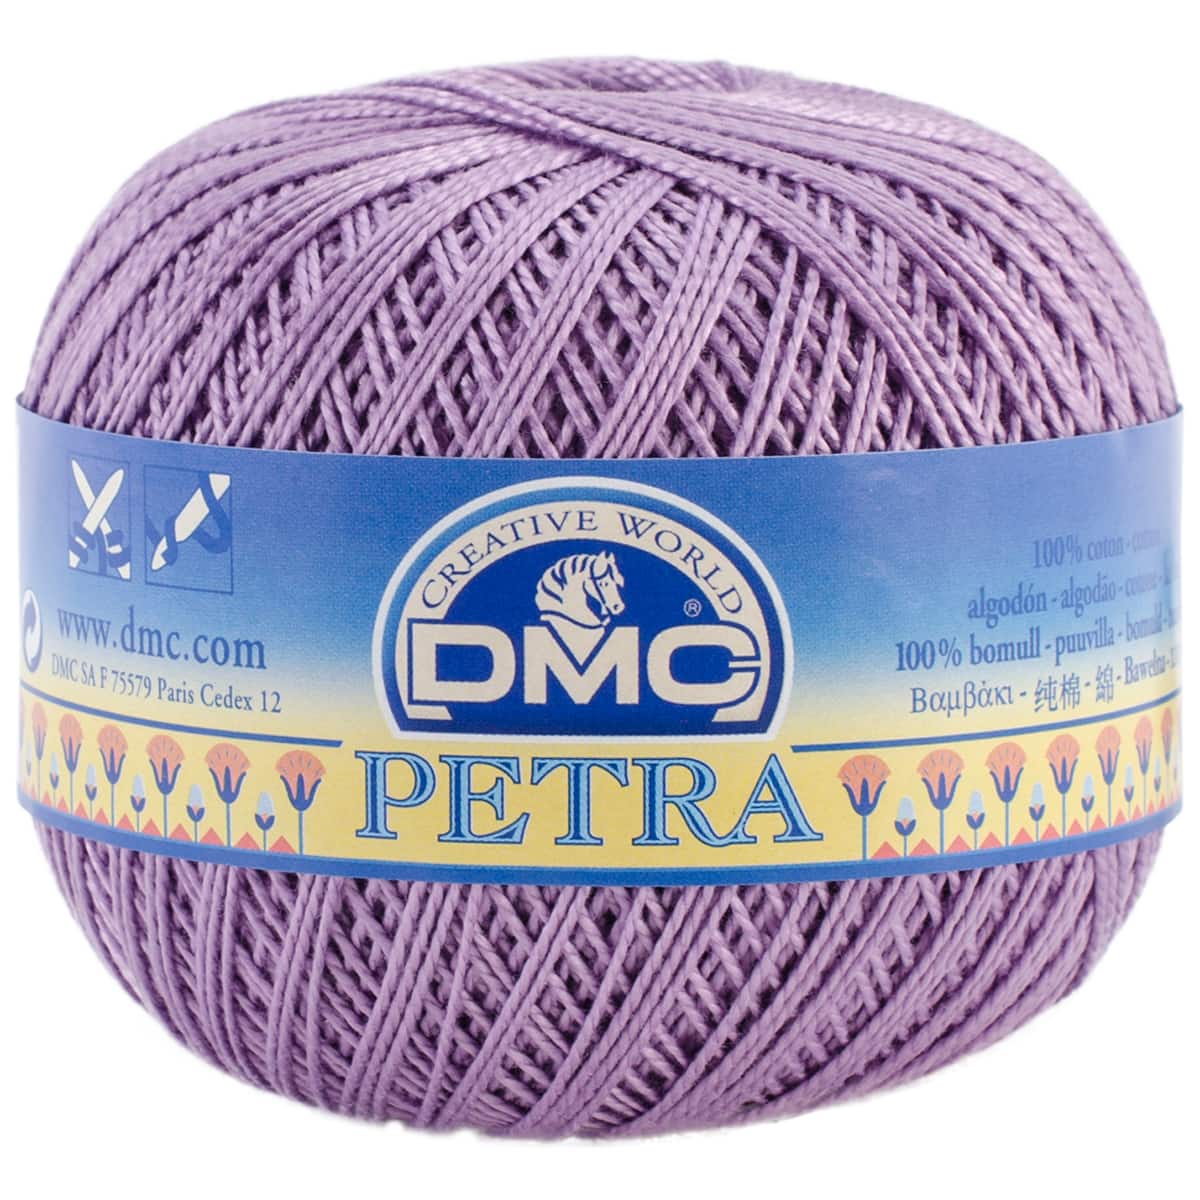 DMC® Petra Size 5 Crochet Cotton Thread